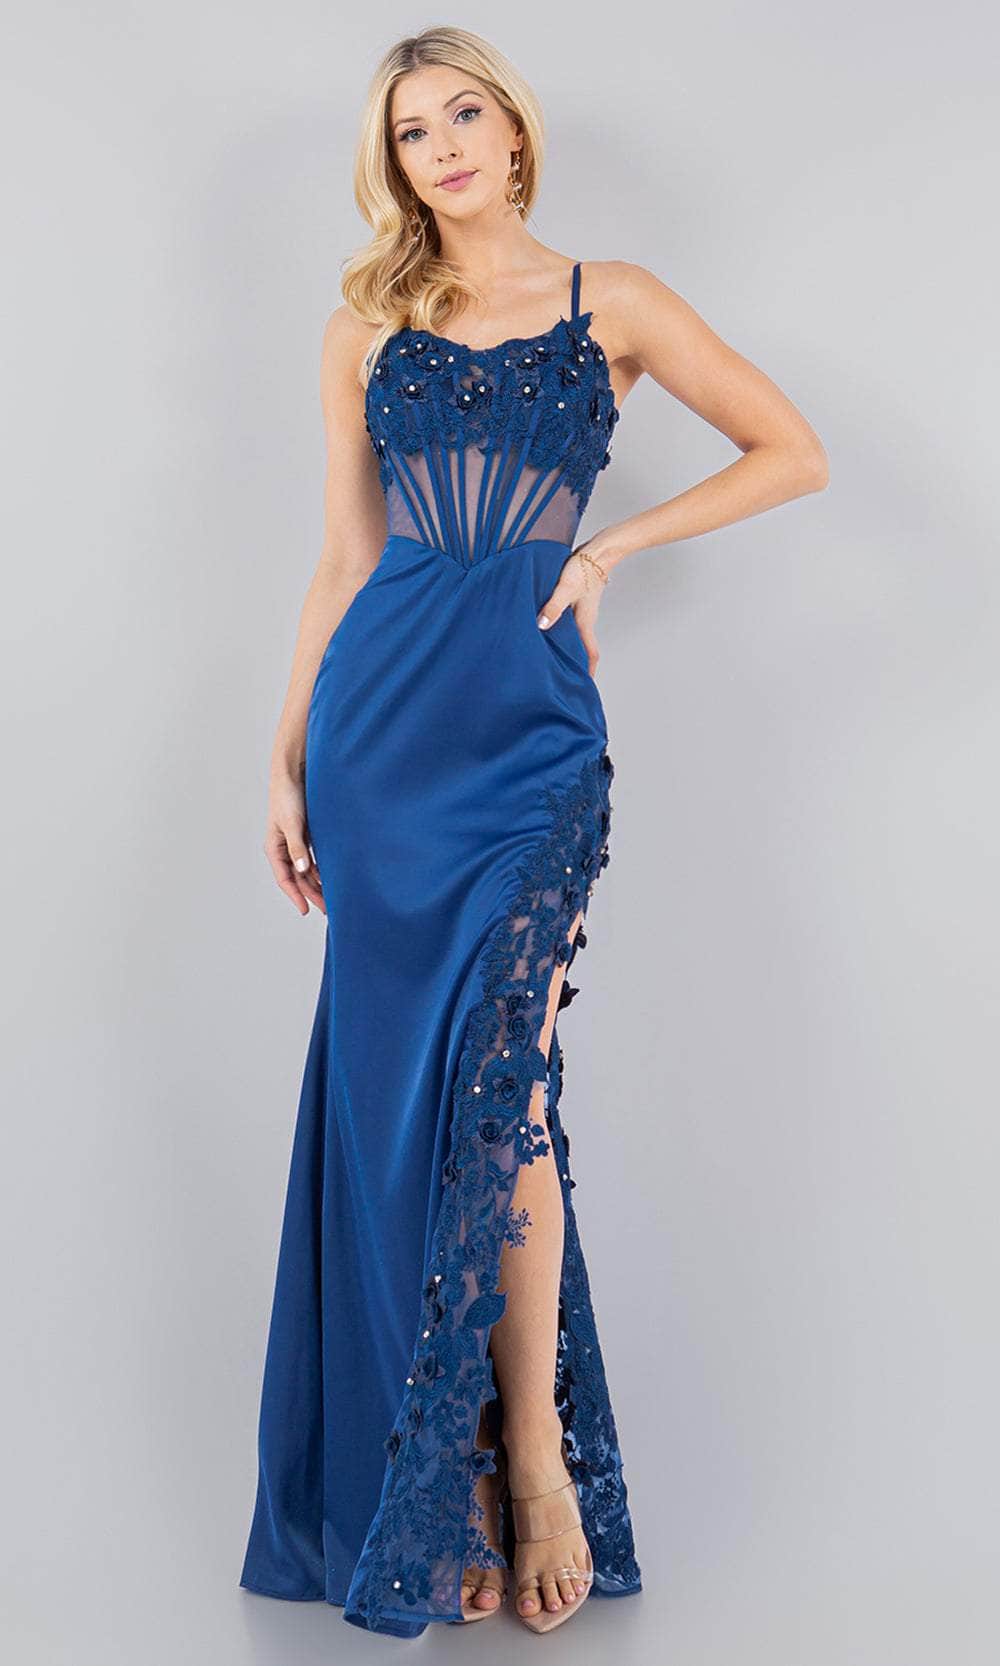 Cinderella Couture 8085J - 3D Floral Embellished Corset Dress Special Occasion Dress XS / Moonlight Blue